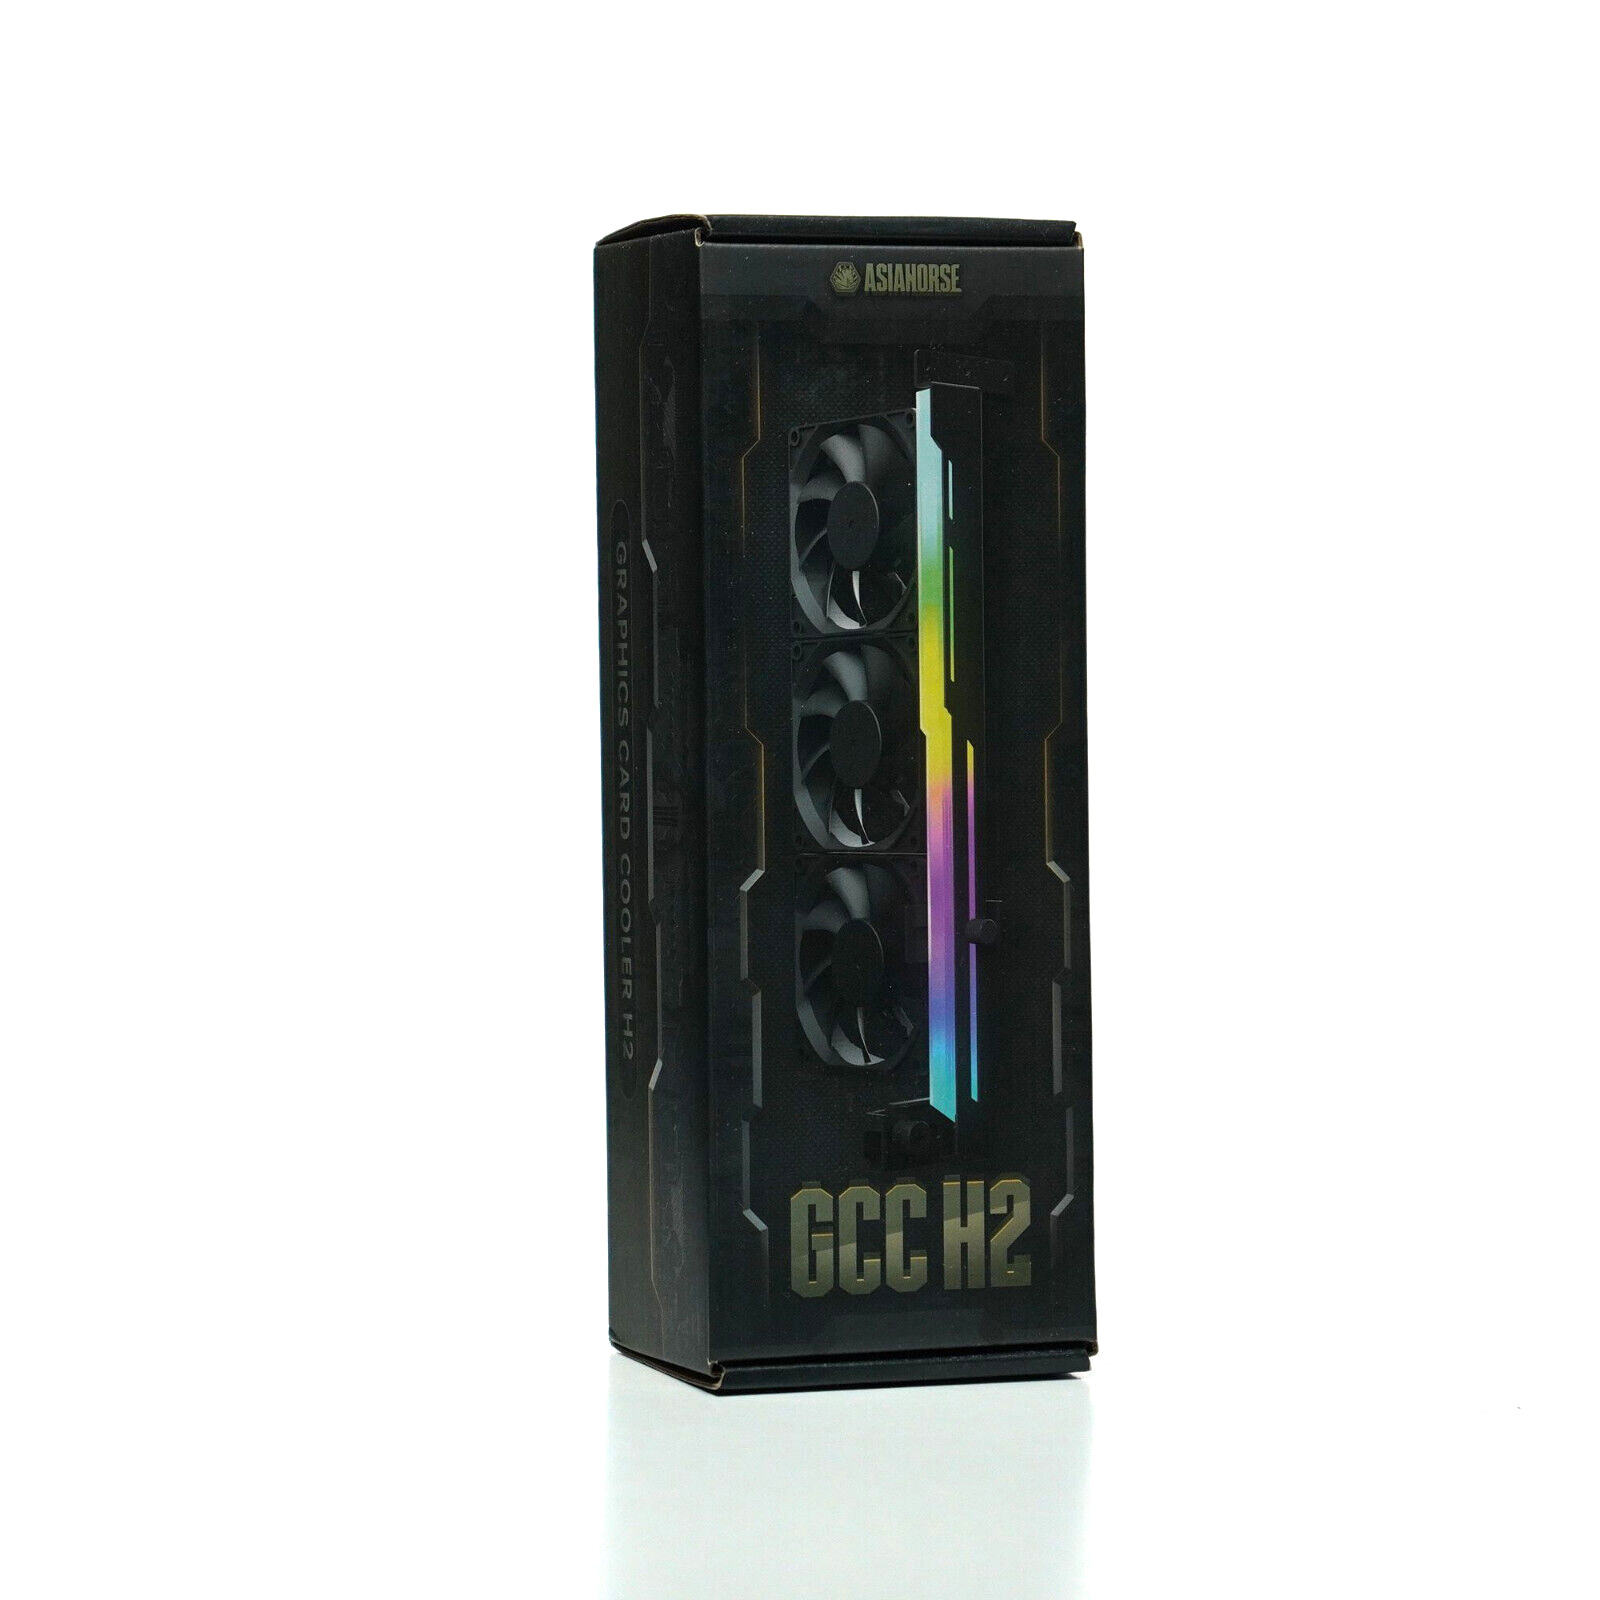 Asiahorse GCC H2 Graphics Card Cooler - Black